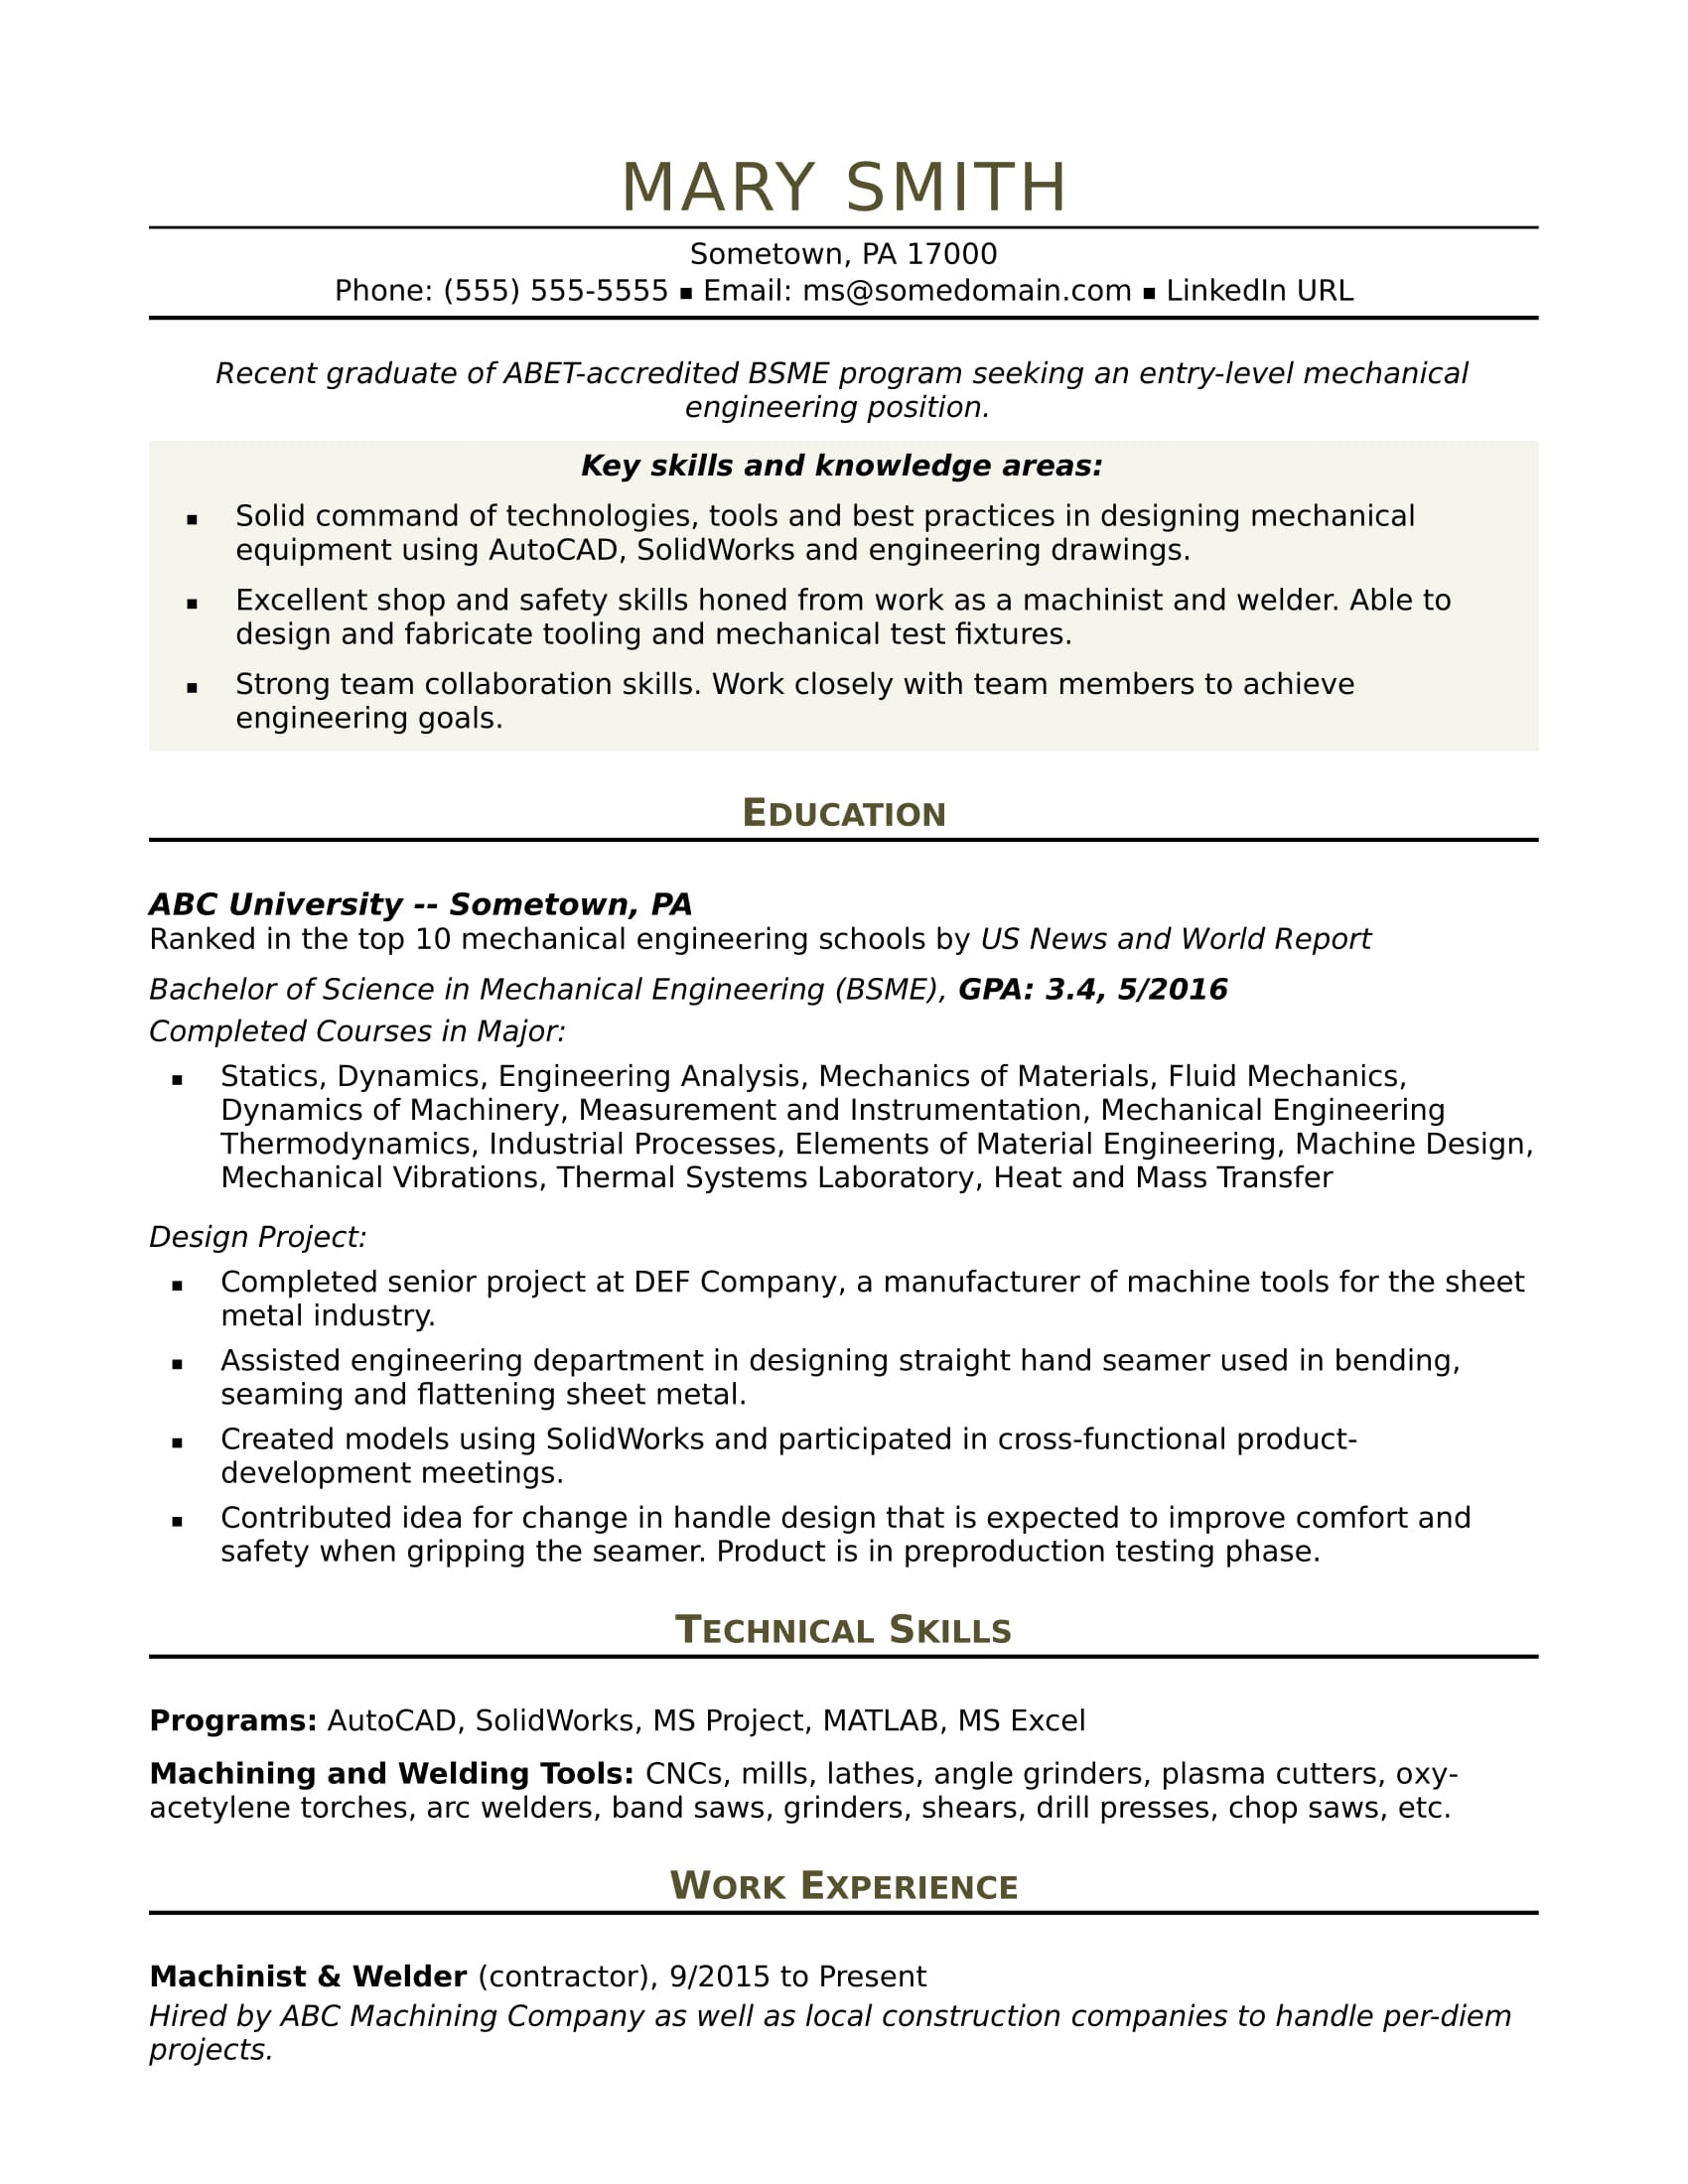 Sample Resume for Product Development Engineer Mechanical Engineer Resume: Entry-level Monster.com